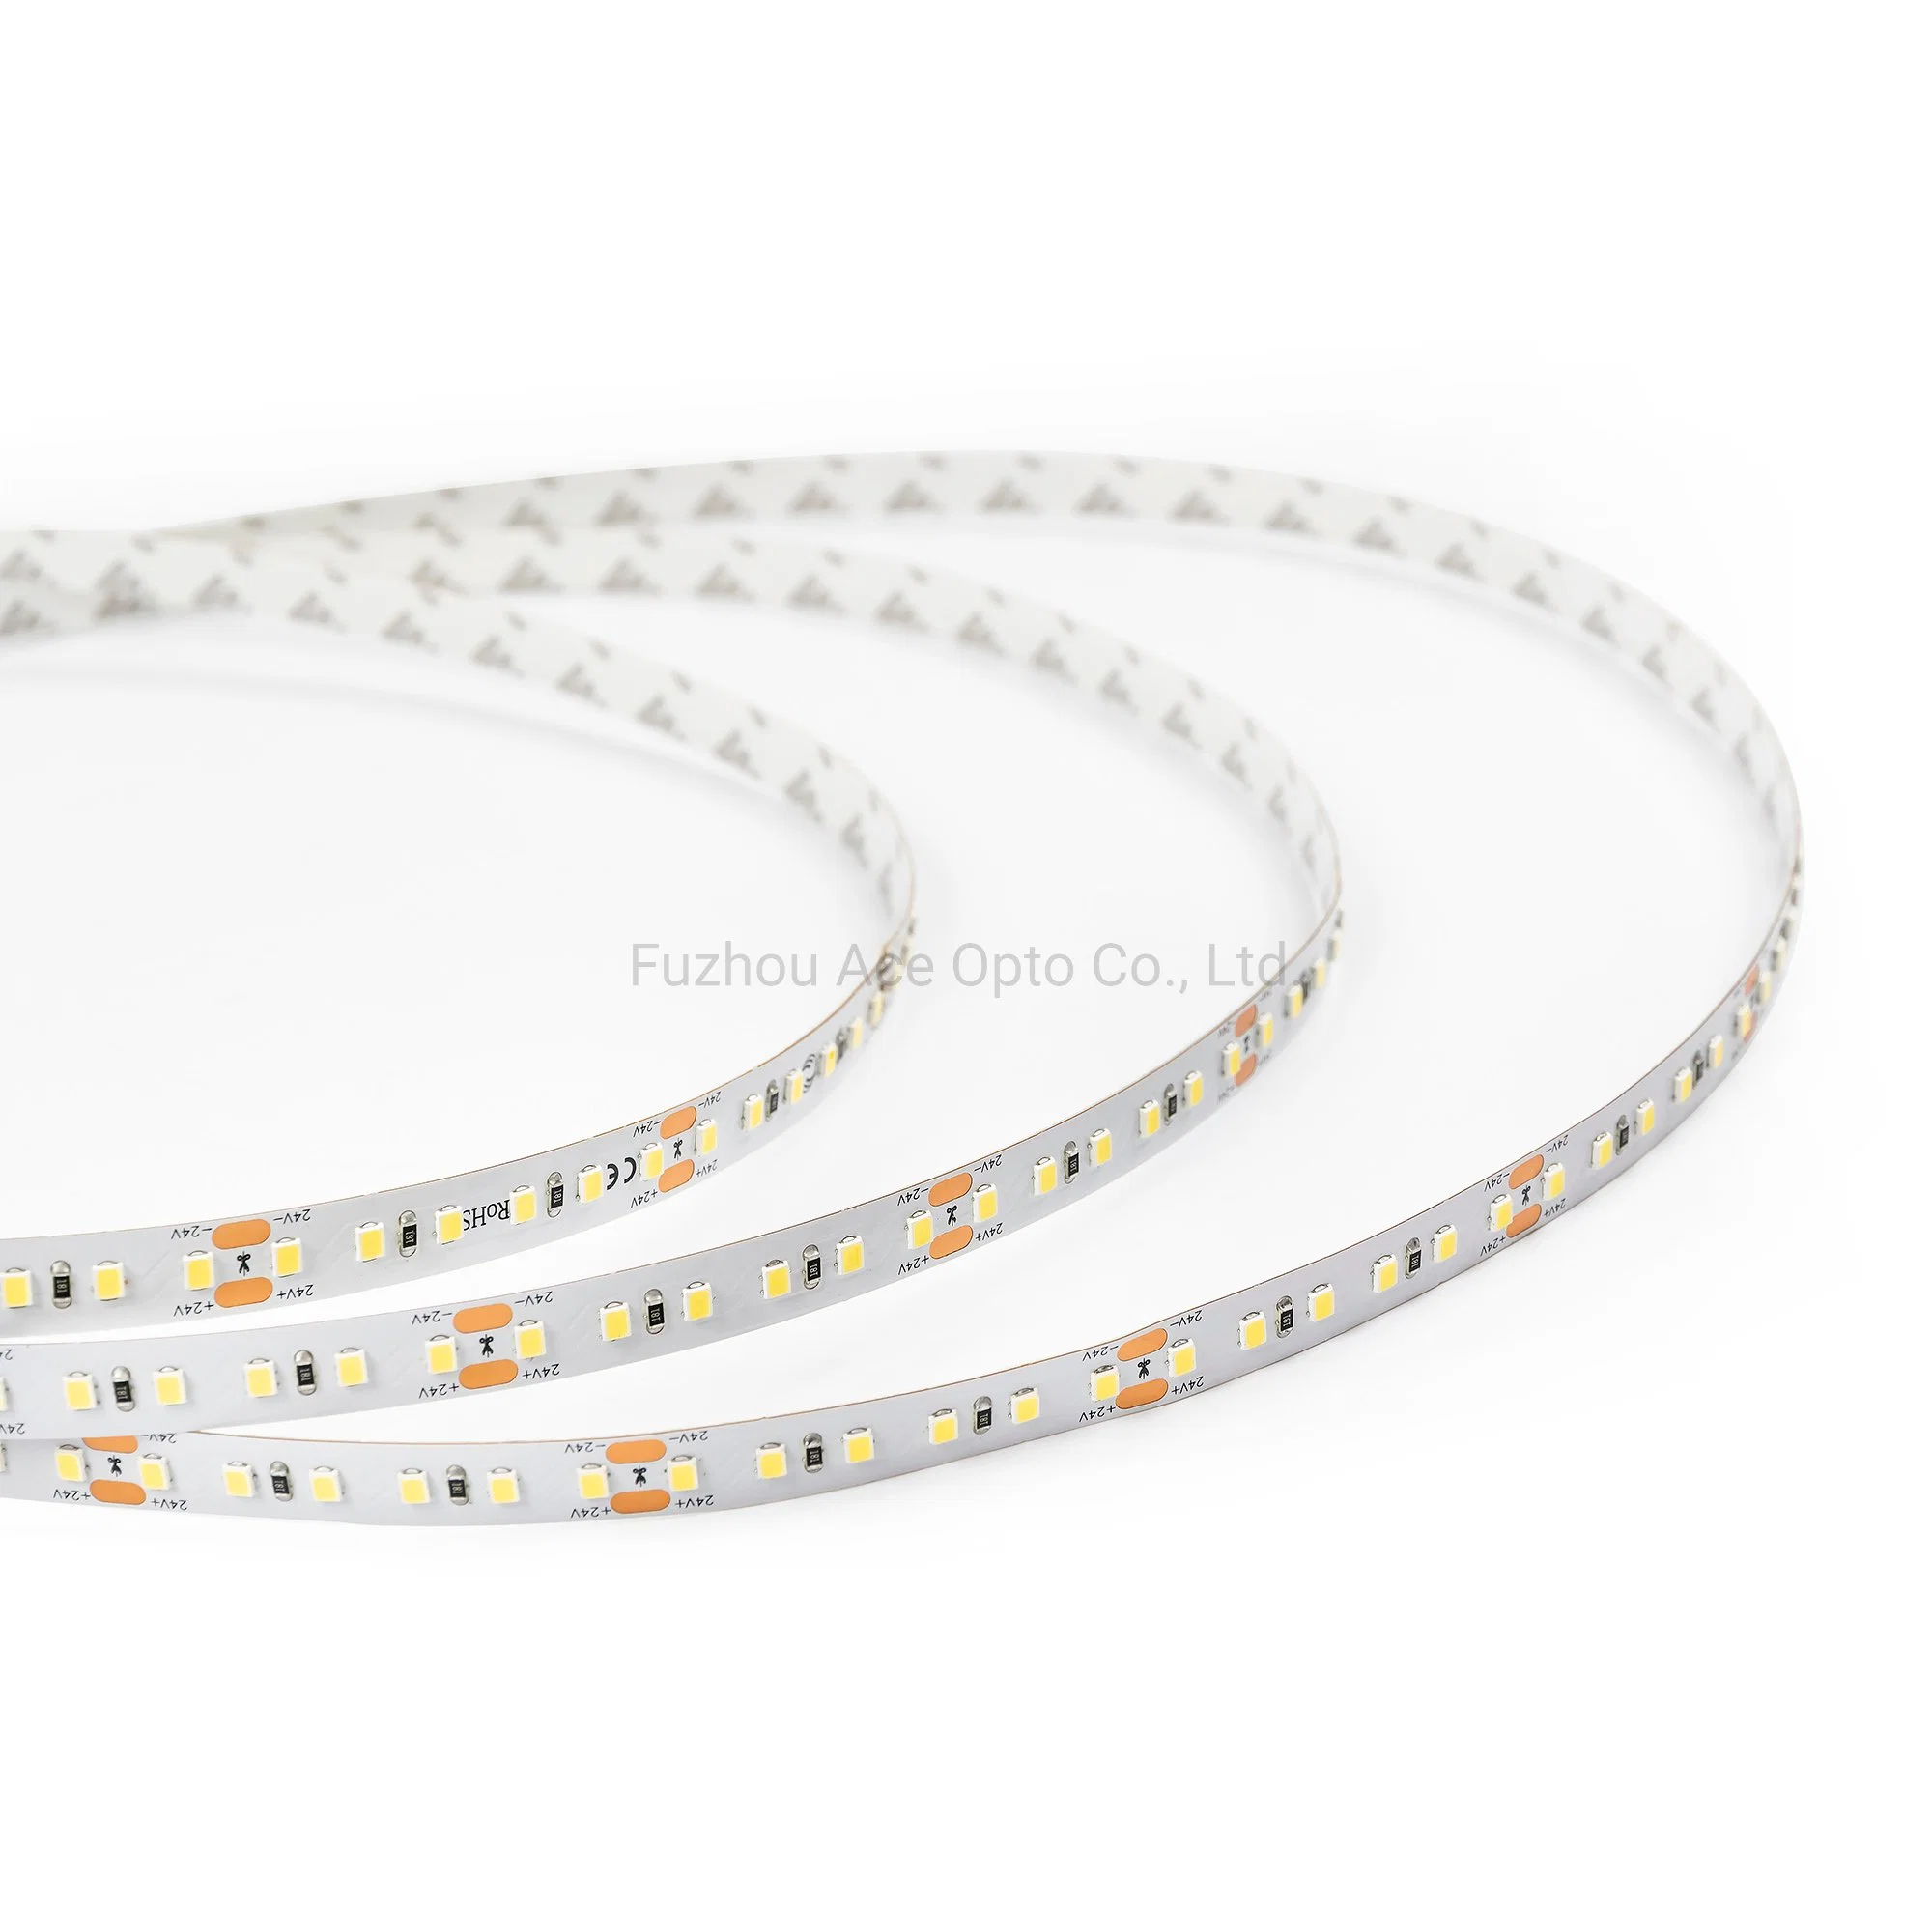 S Shape 6mm 3528 SMD 60 LEDs flexibler LED-Streifen 5V adressierbare LED für abbdendbaren RGB-Streifen